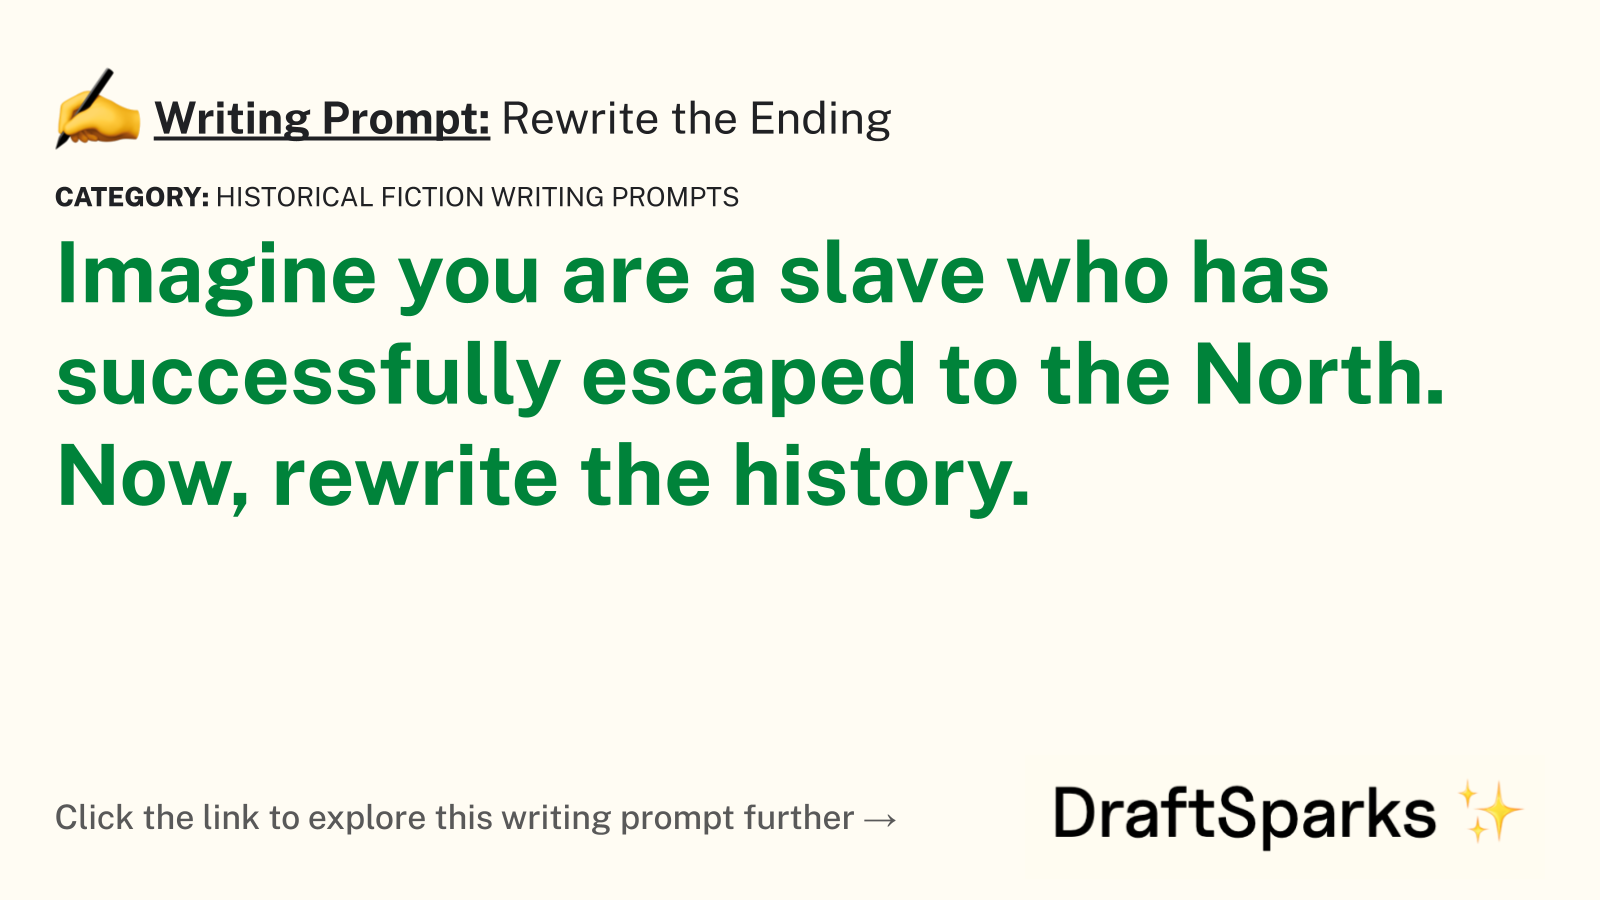 Rewrite the Ending